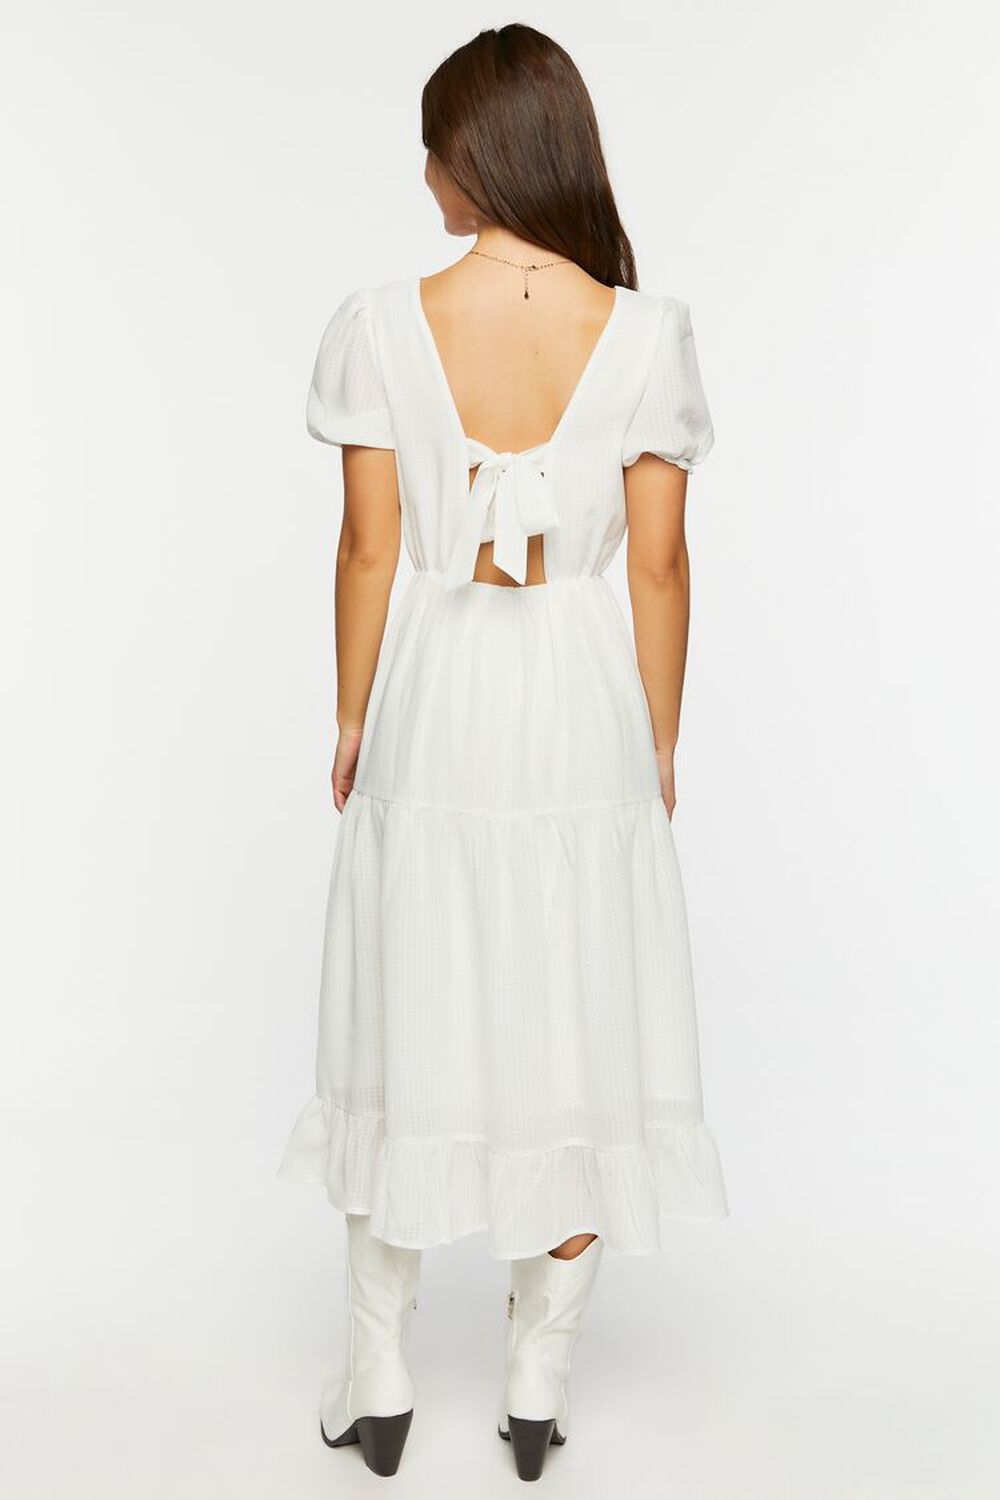 WHITE Gingham Chiffon Tiered Midi Dress, image 3